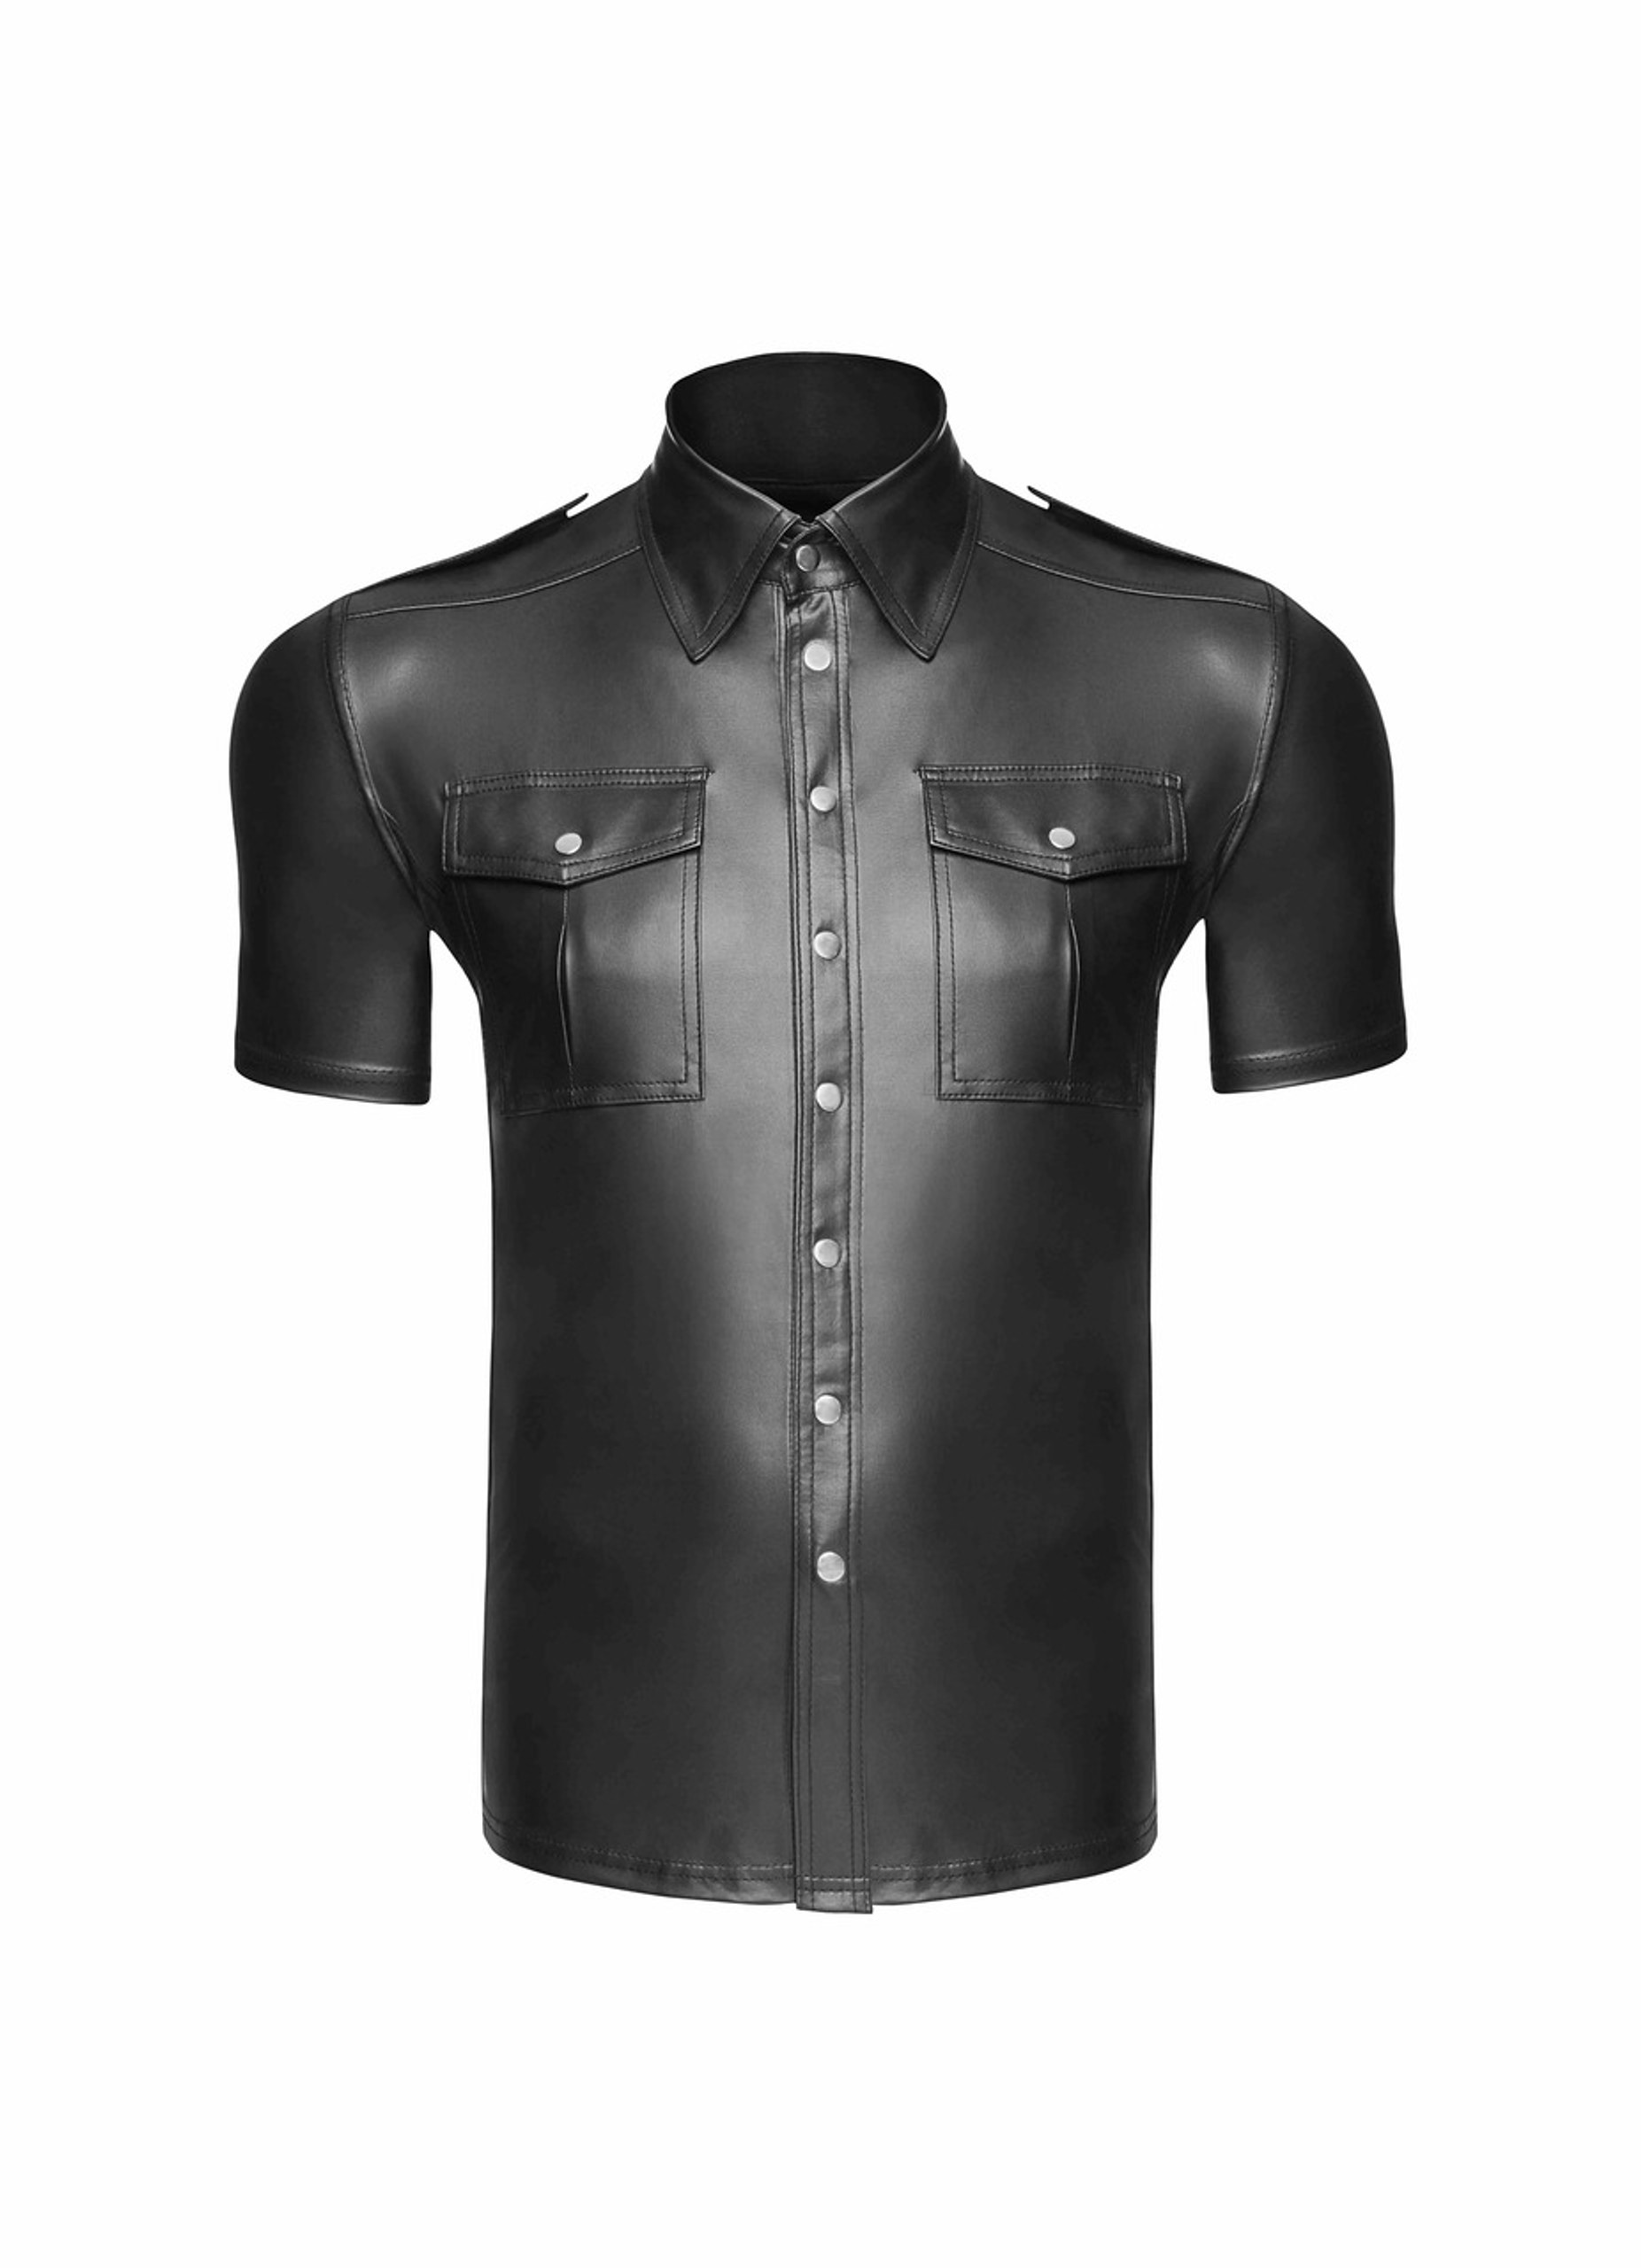 Noir Handmade H011 Shirt / Hemd sexy und elegant